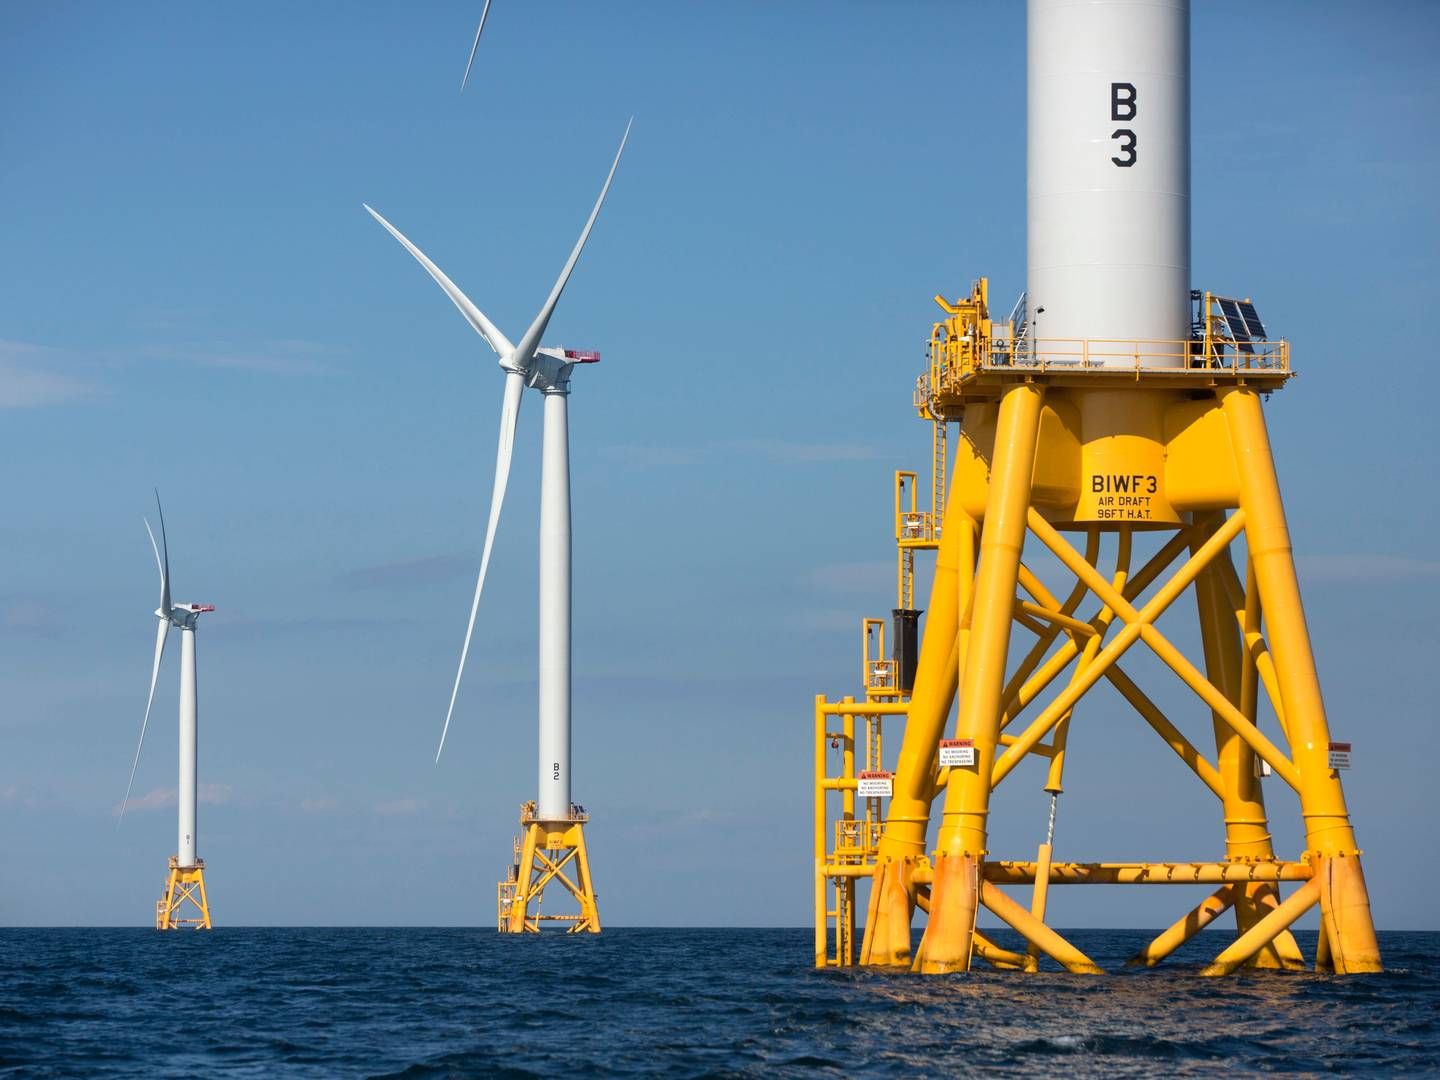 Block Island is one of the offshore wind projects still generating value. | Photo: Michael Dwyer/ap/ritzau Scanpix